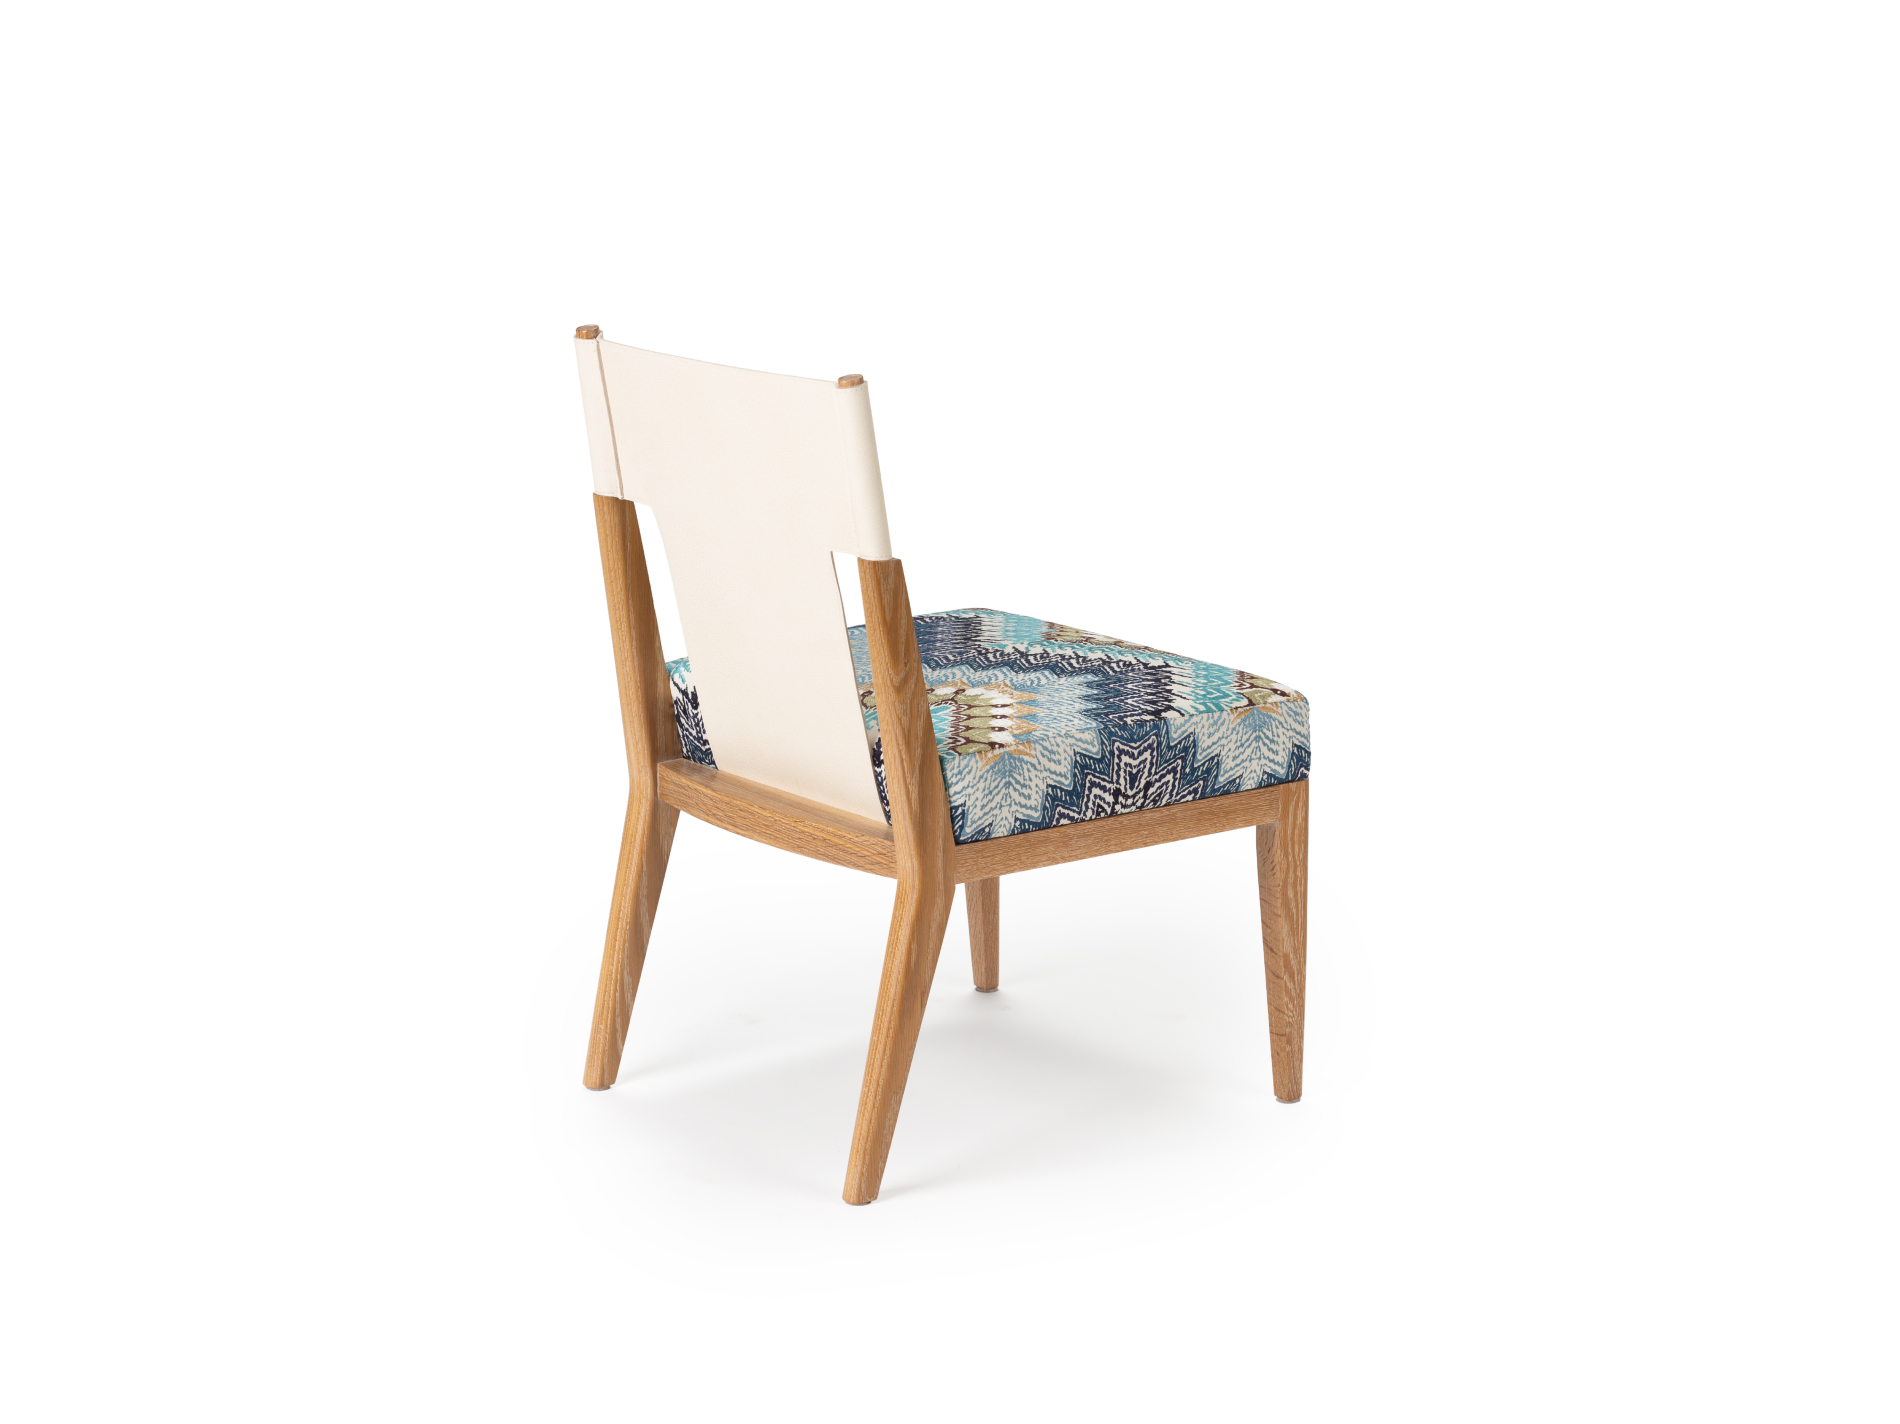 The Studio North Chair  — SOLO by Allan Switzer